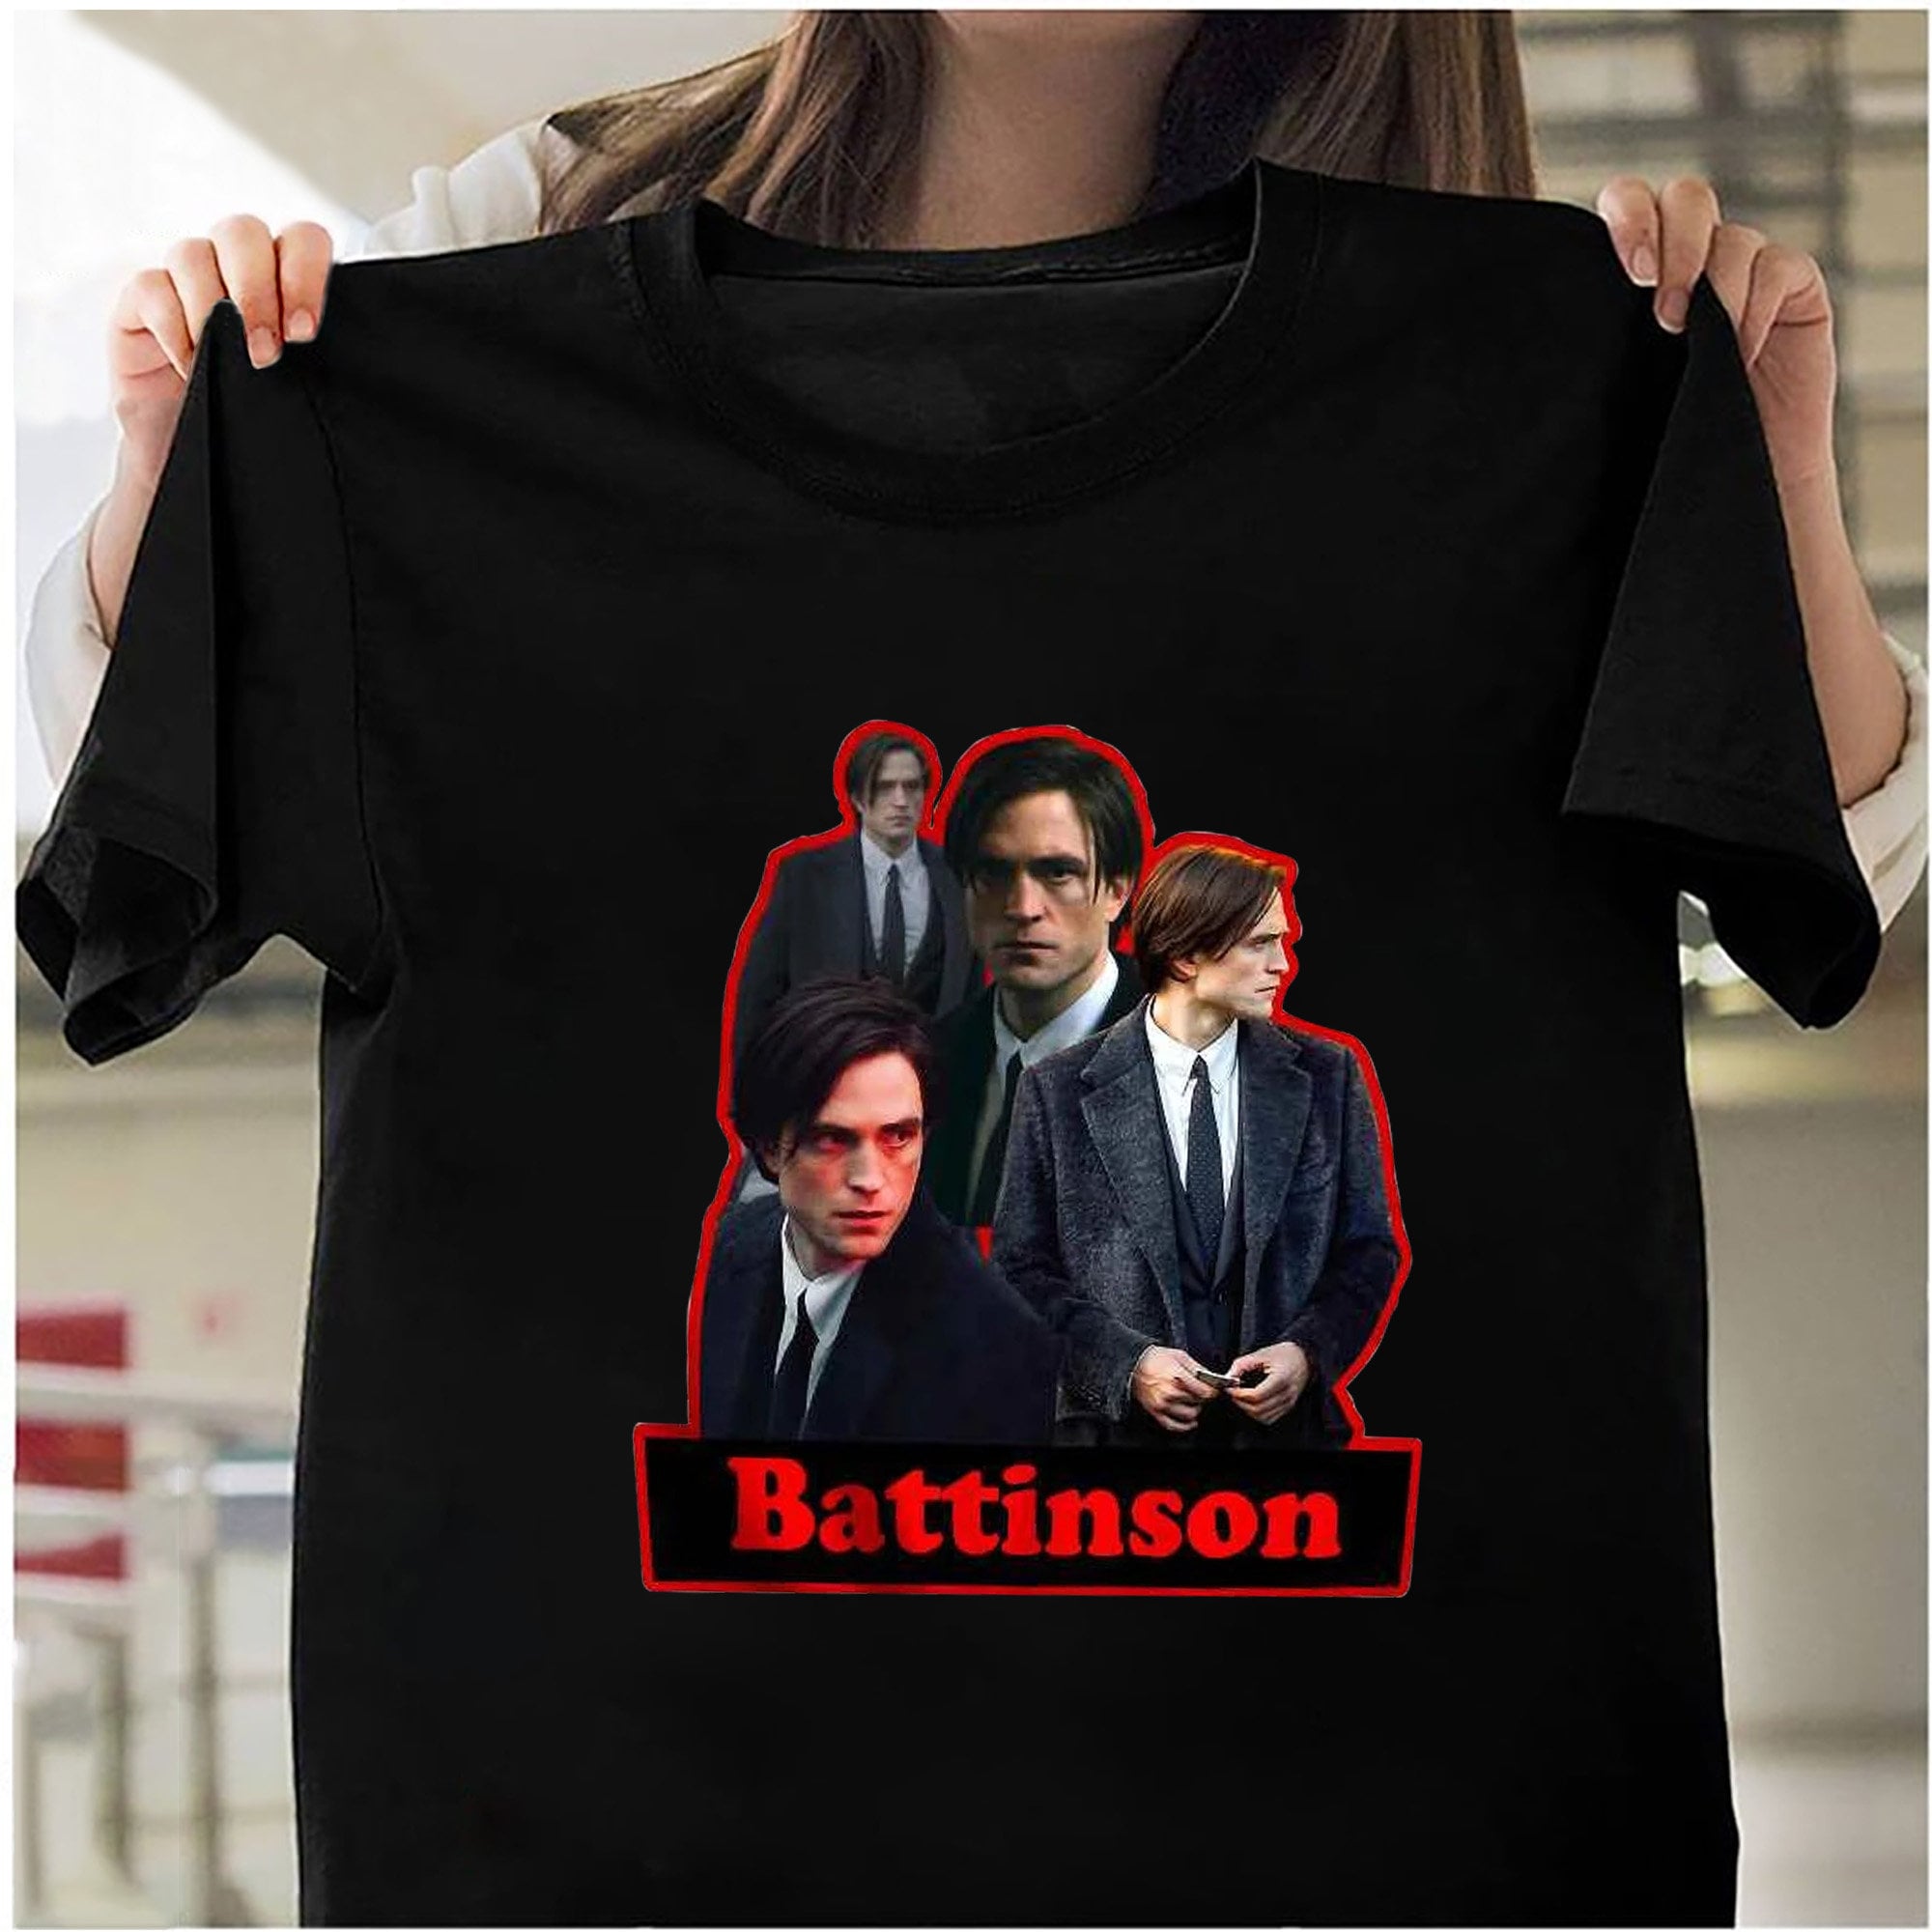 Discover Battinson Shirt, The Batman Movie 2022 Robert Pattinson, Batman 2022 T-Shirt